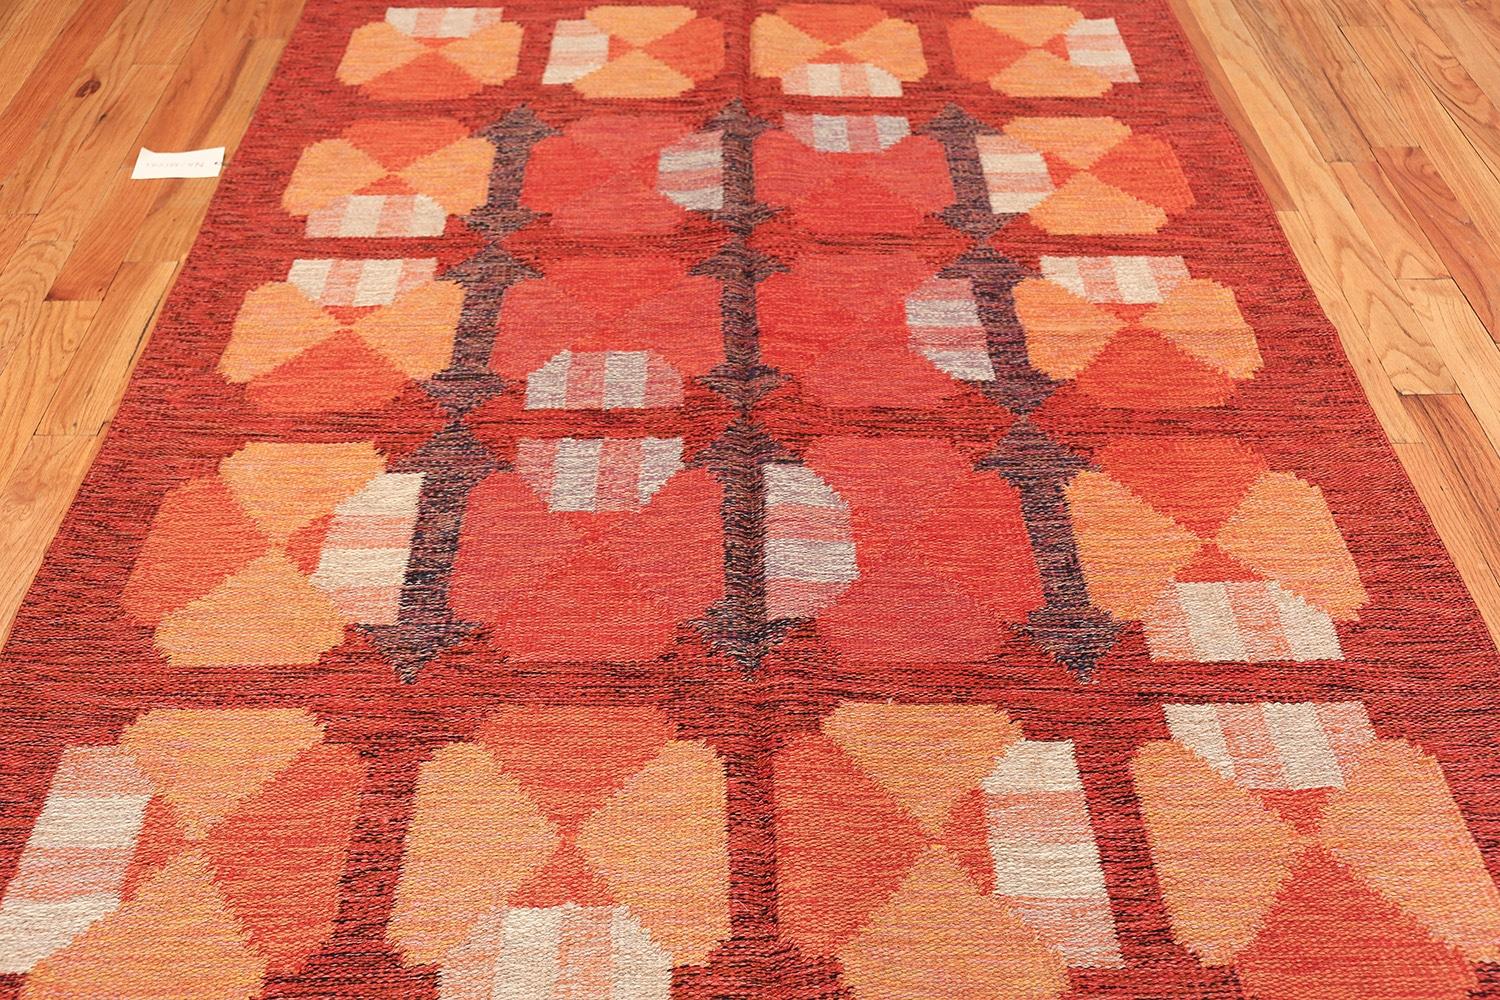 Swedish Vintage Finnish Carpet by Alestalon Mattokutomo. Size: 5 ft 4 in x 7 ft 9 in